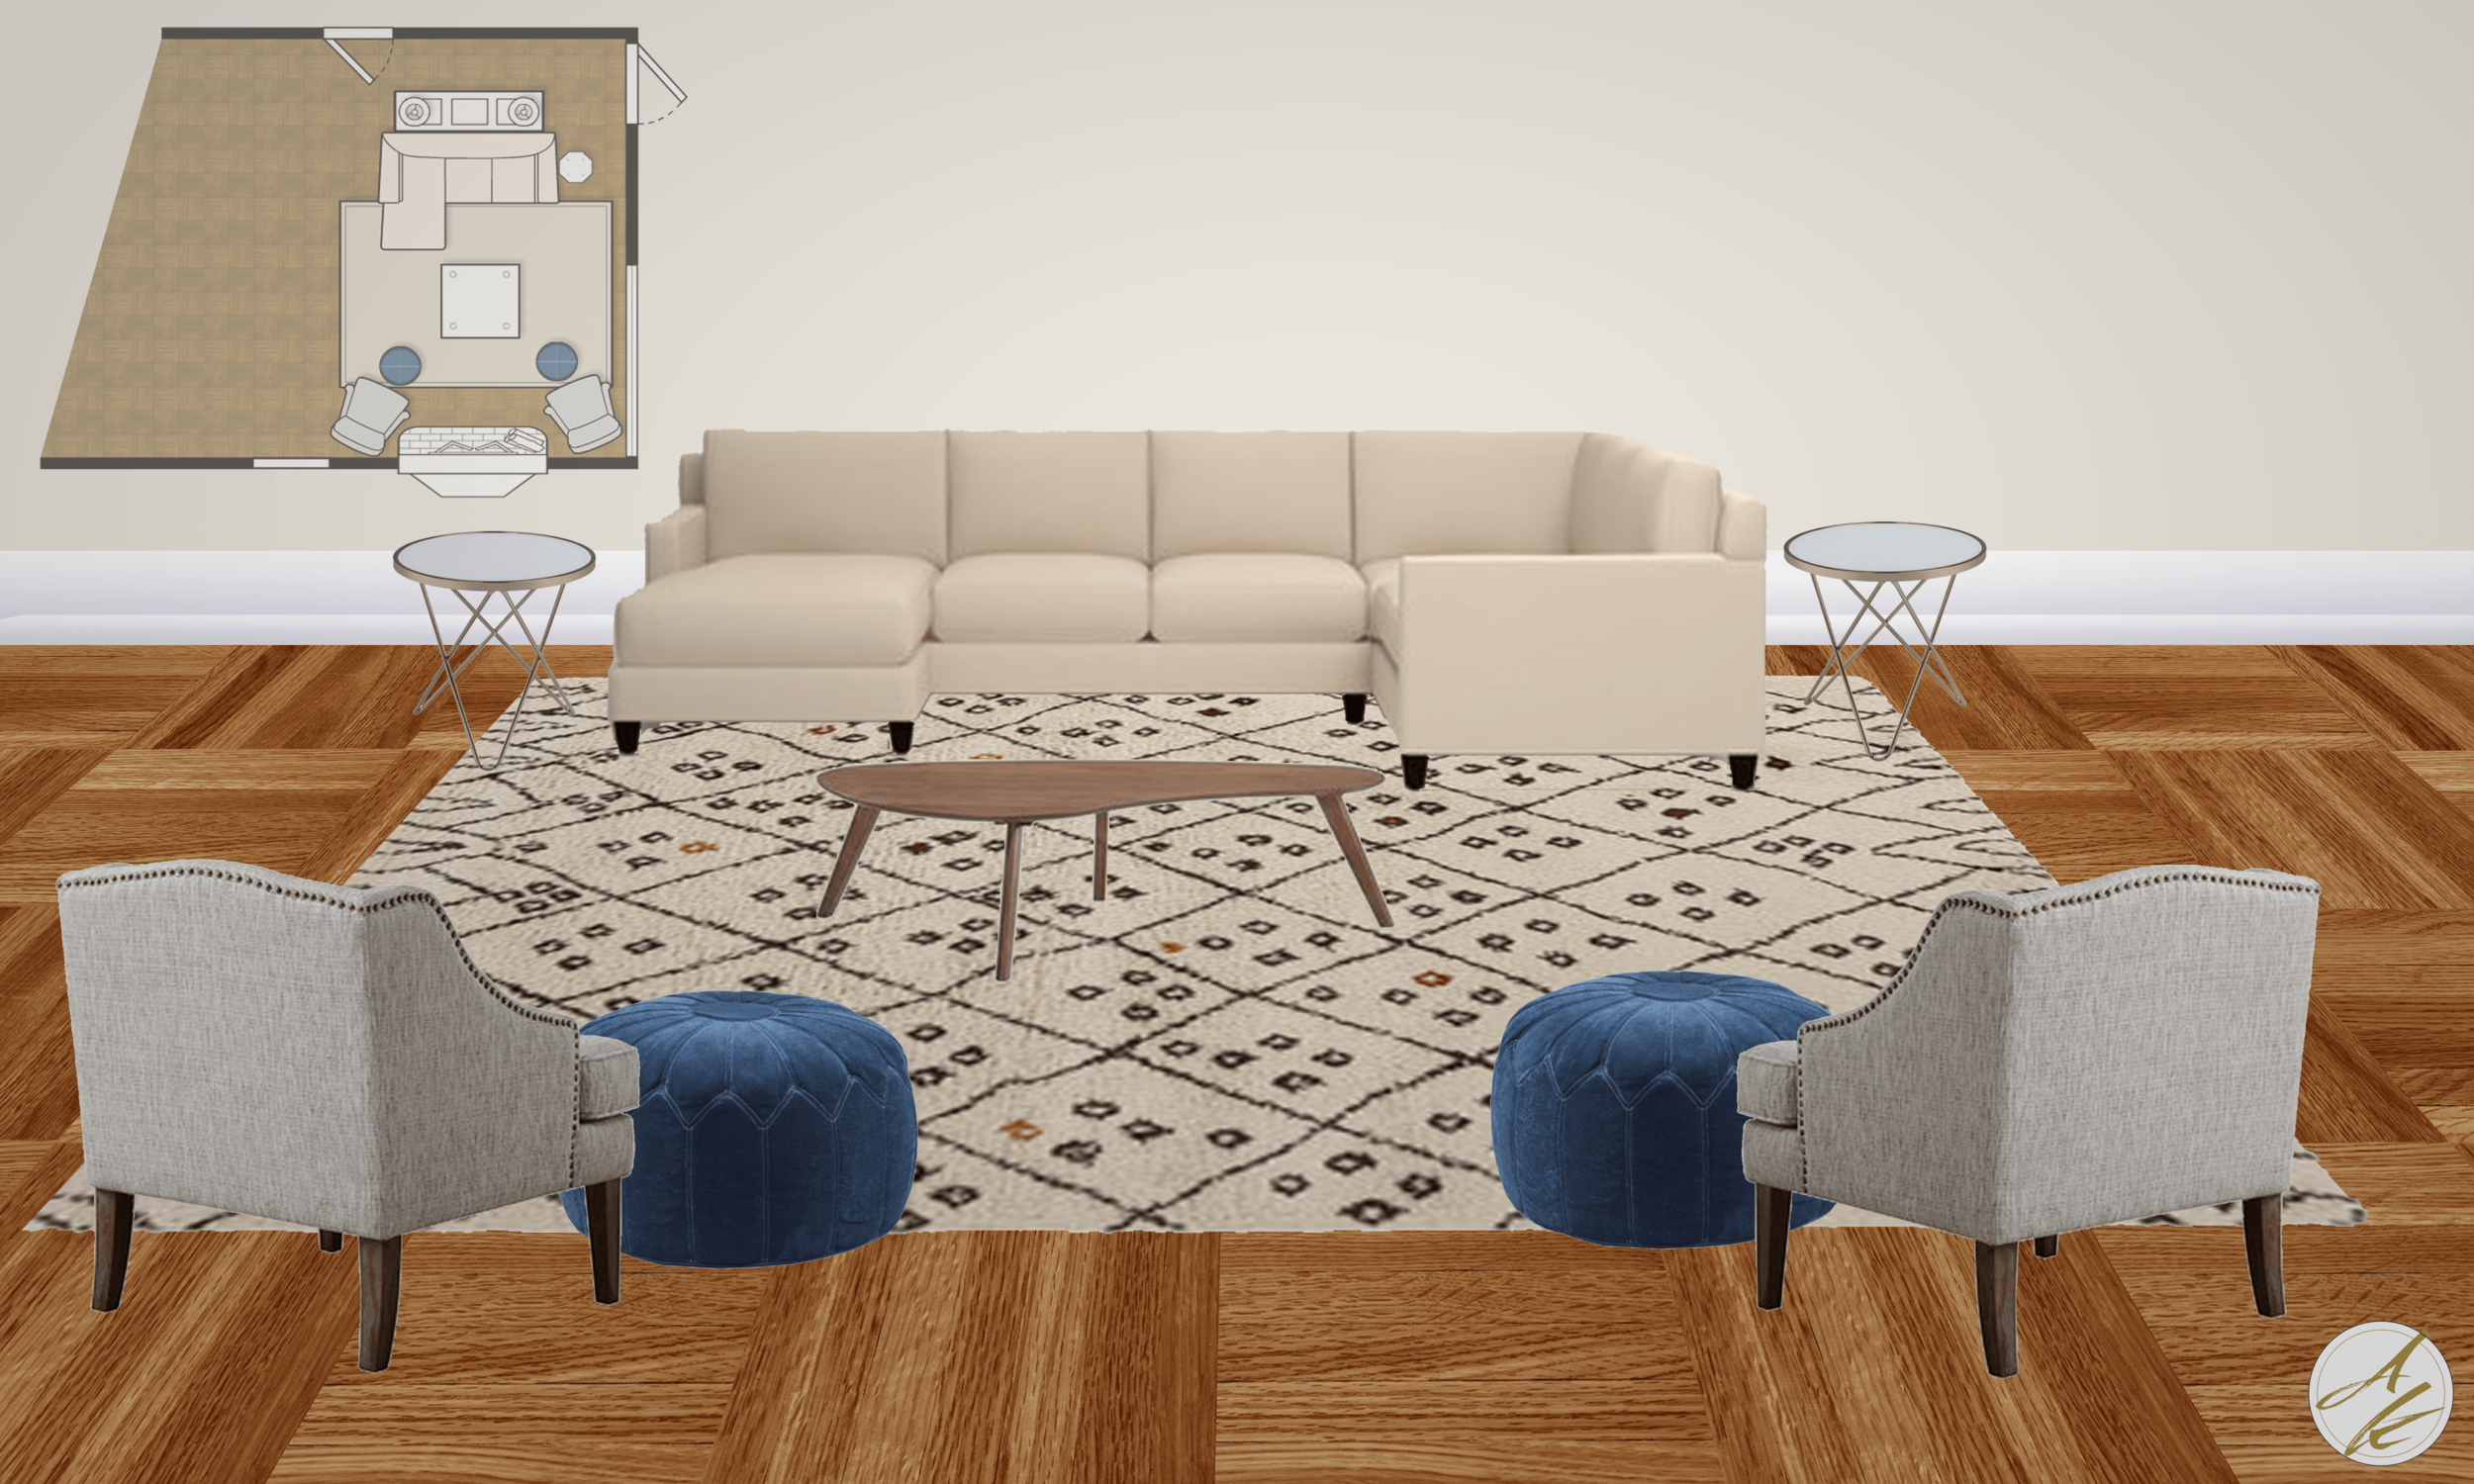 Living Room Draft Design